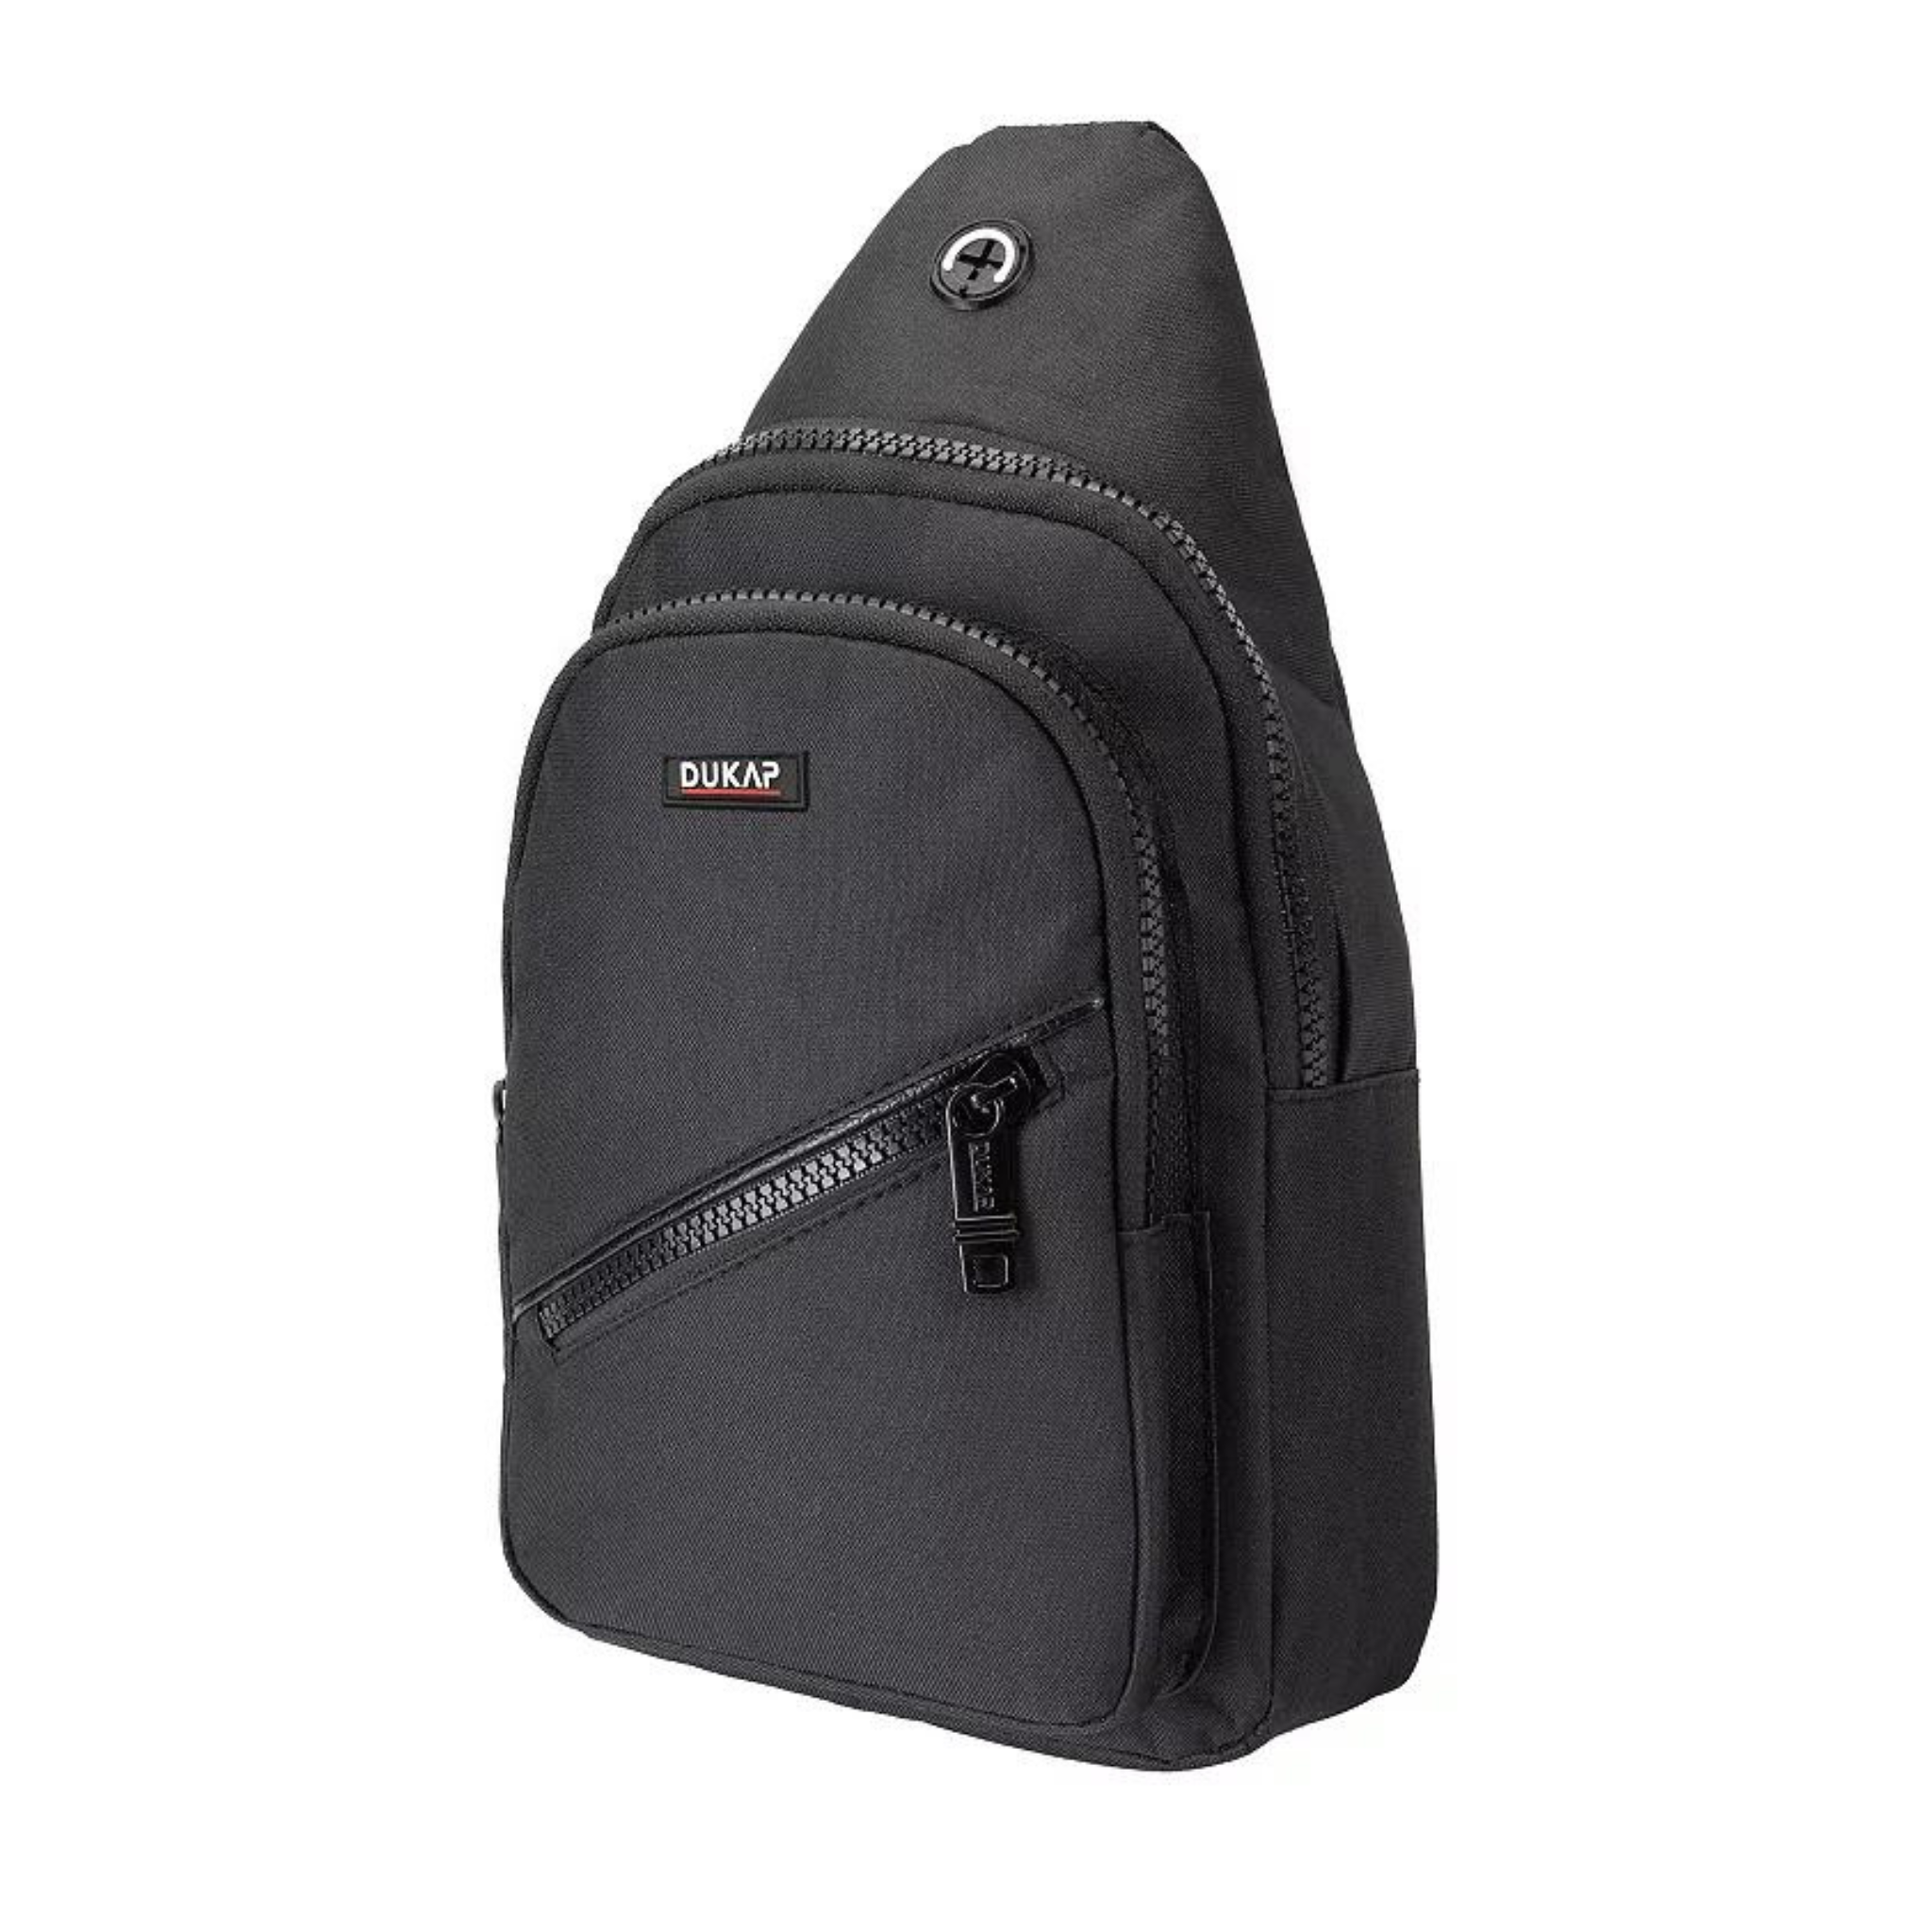 Dukap Beekle Sling Bag with Changeable Shoulder Strap